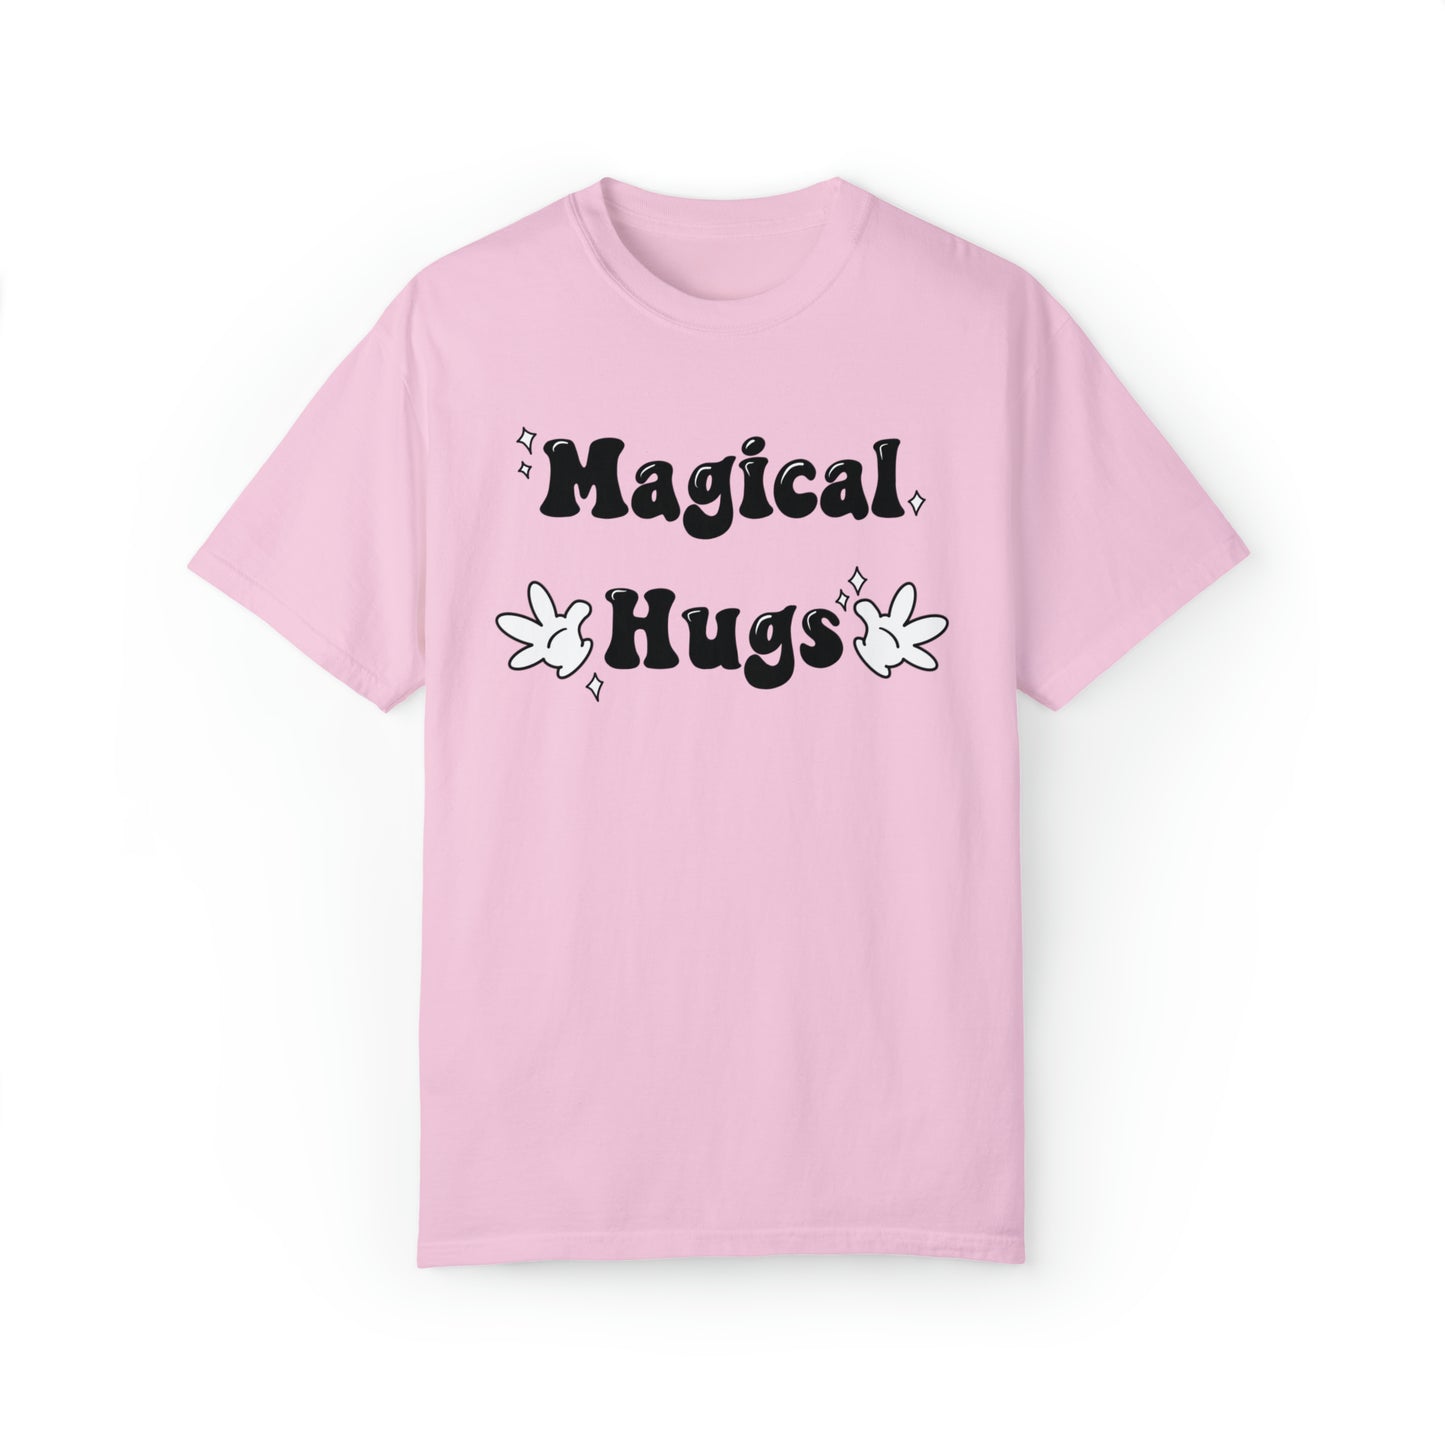 Adult Magical Hugs Tee - Comfort Colors